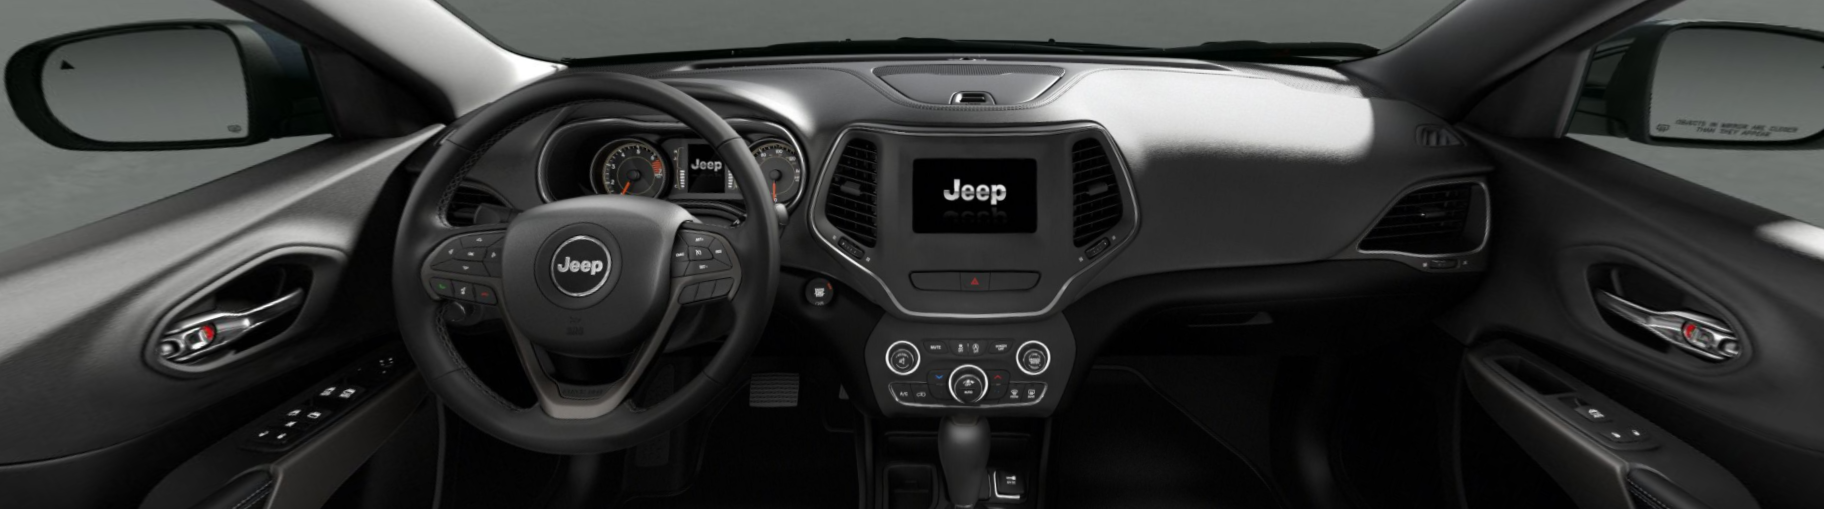 2020 Jeep Cherokee Latitude Plus Front Interior Dash Picture.png